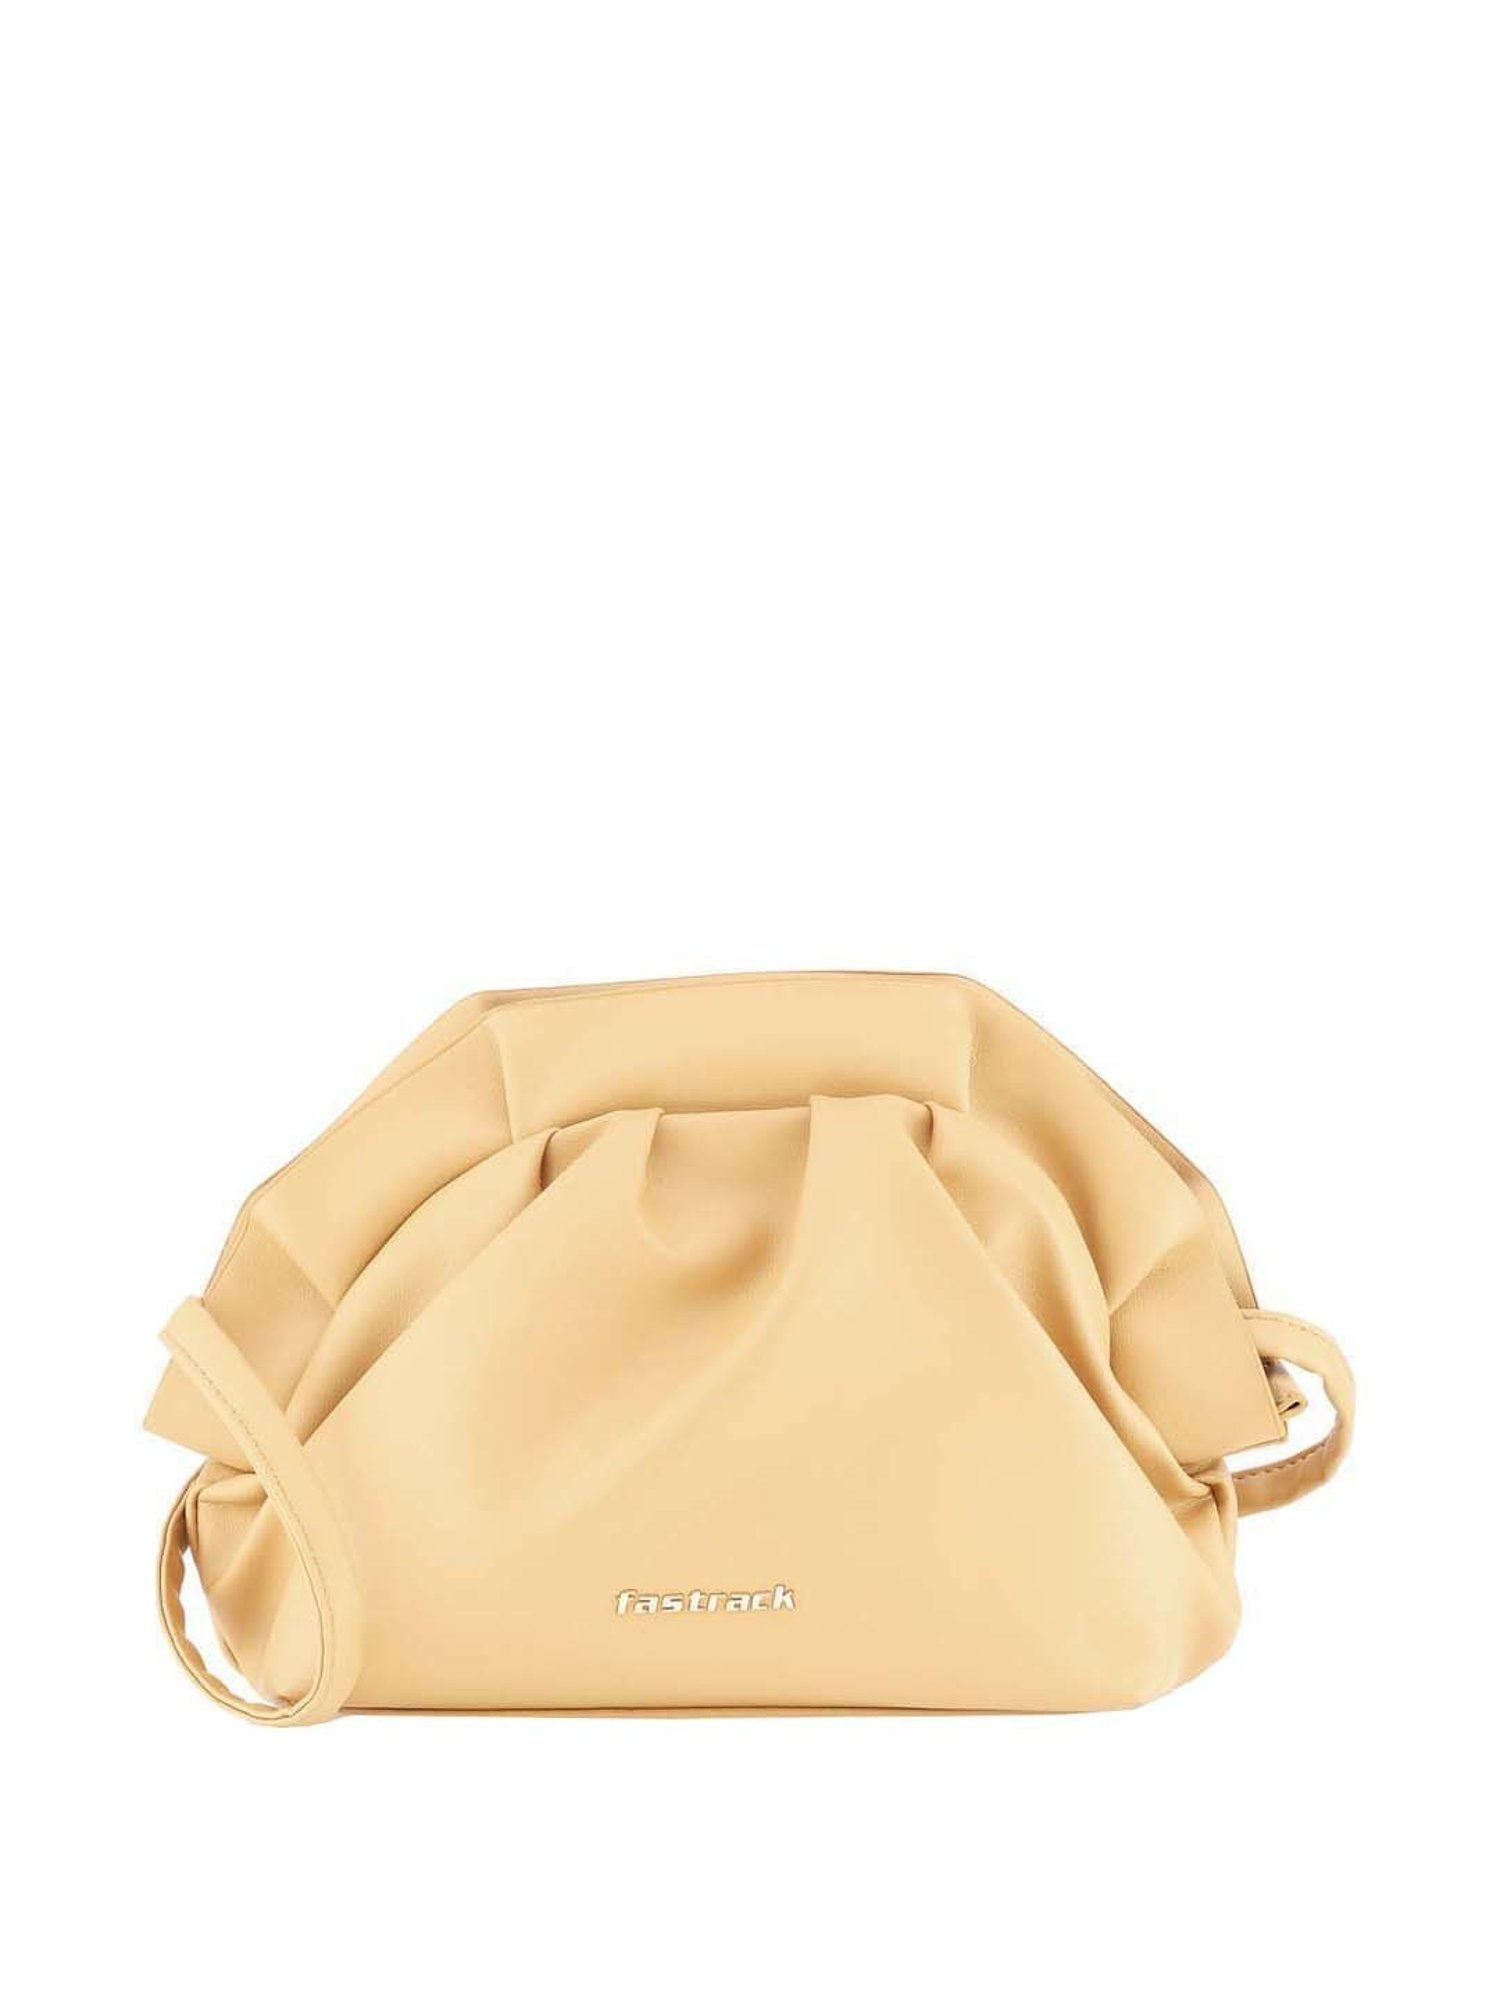 Fastrack Women's Yellow Sling Bag : : Fashion